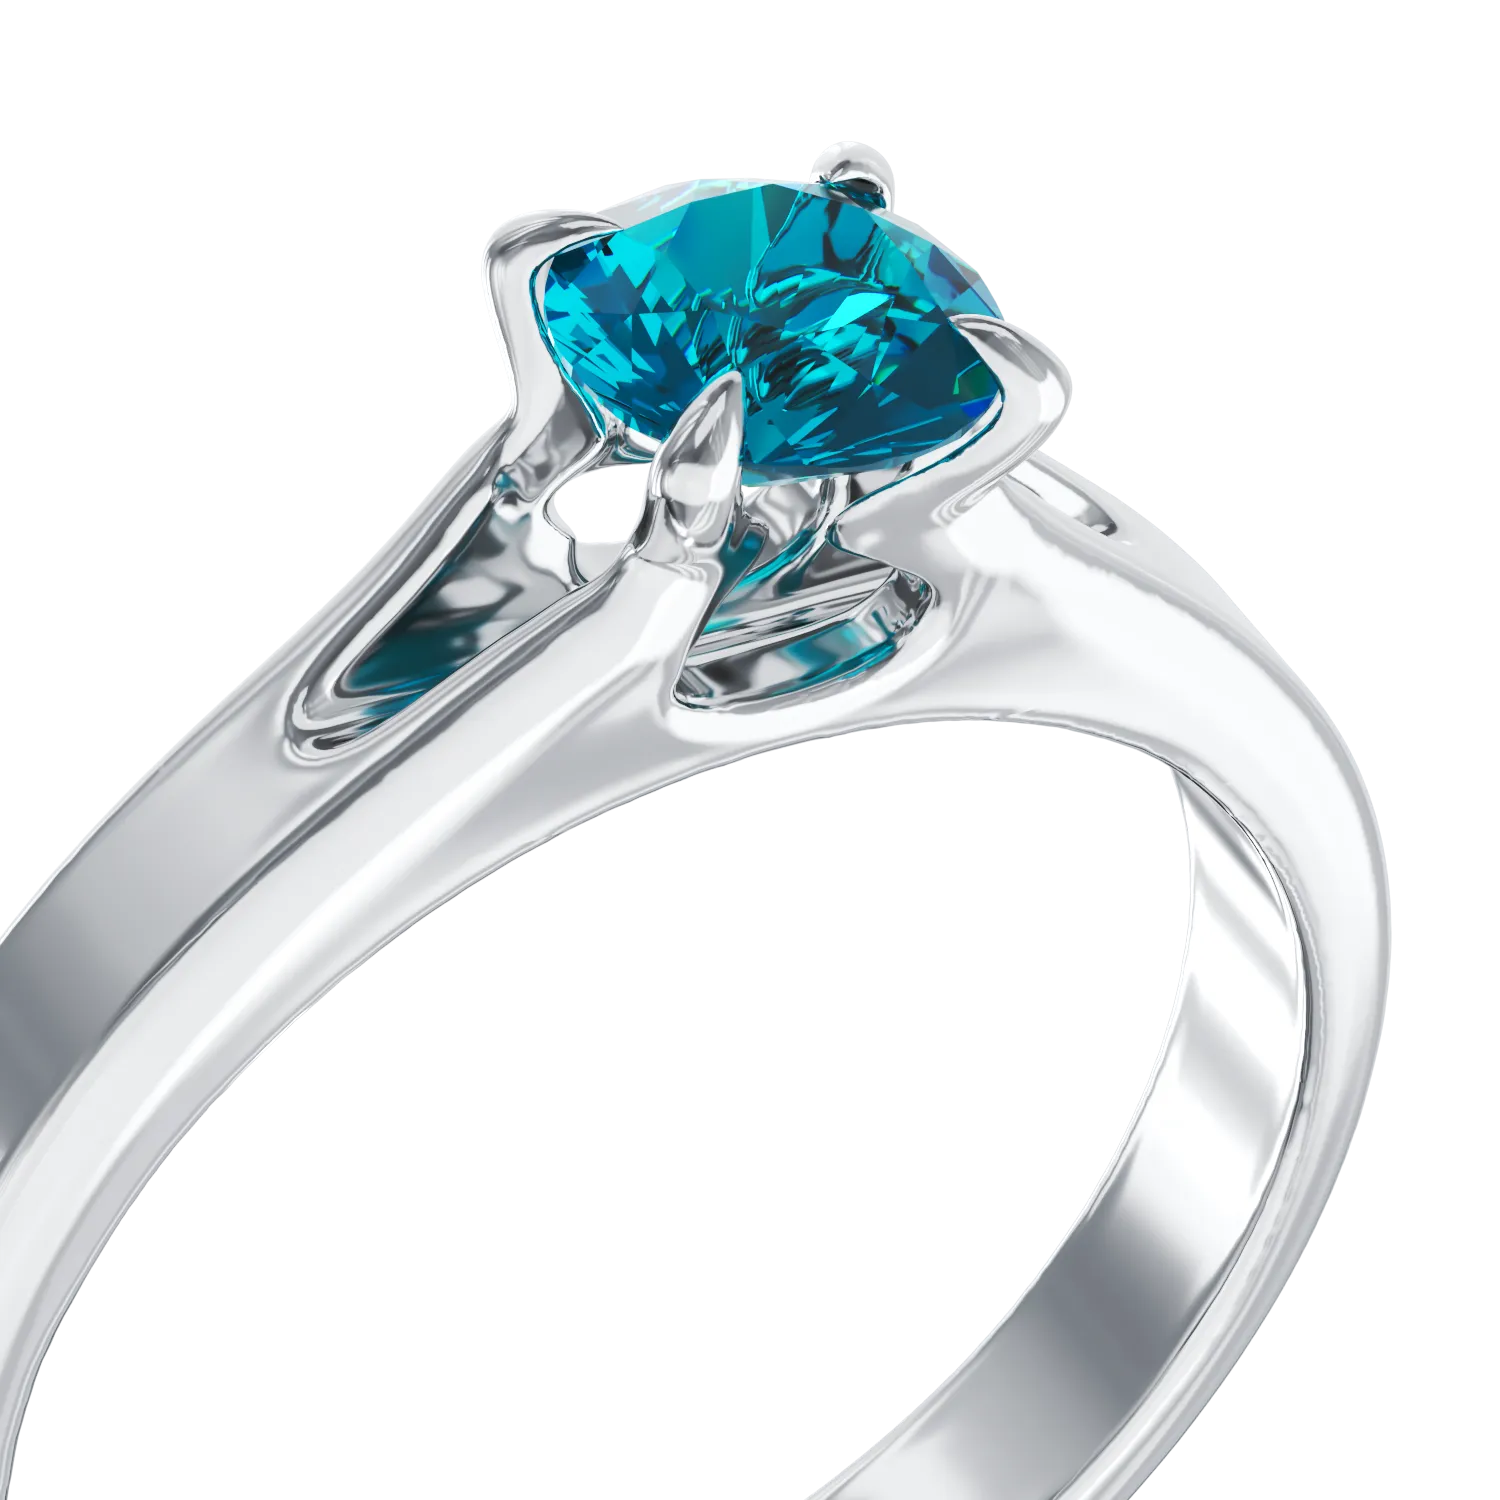 Inel de logodna din aur alb de 18K cu un diamant solitaire albastru de 0.33ct